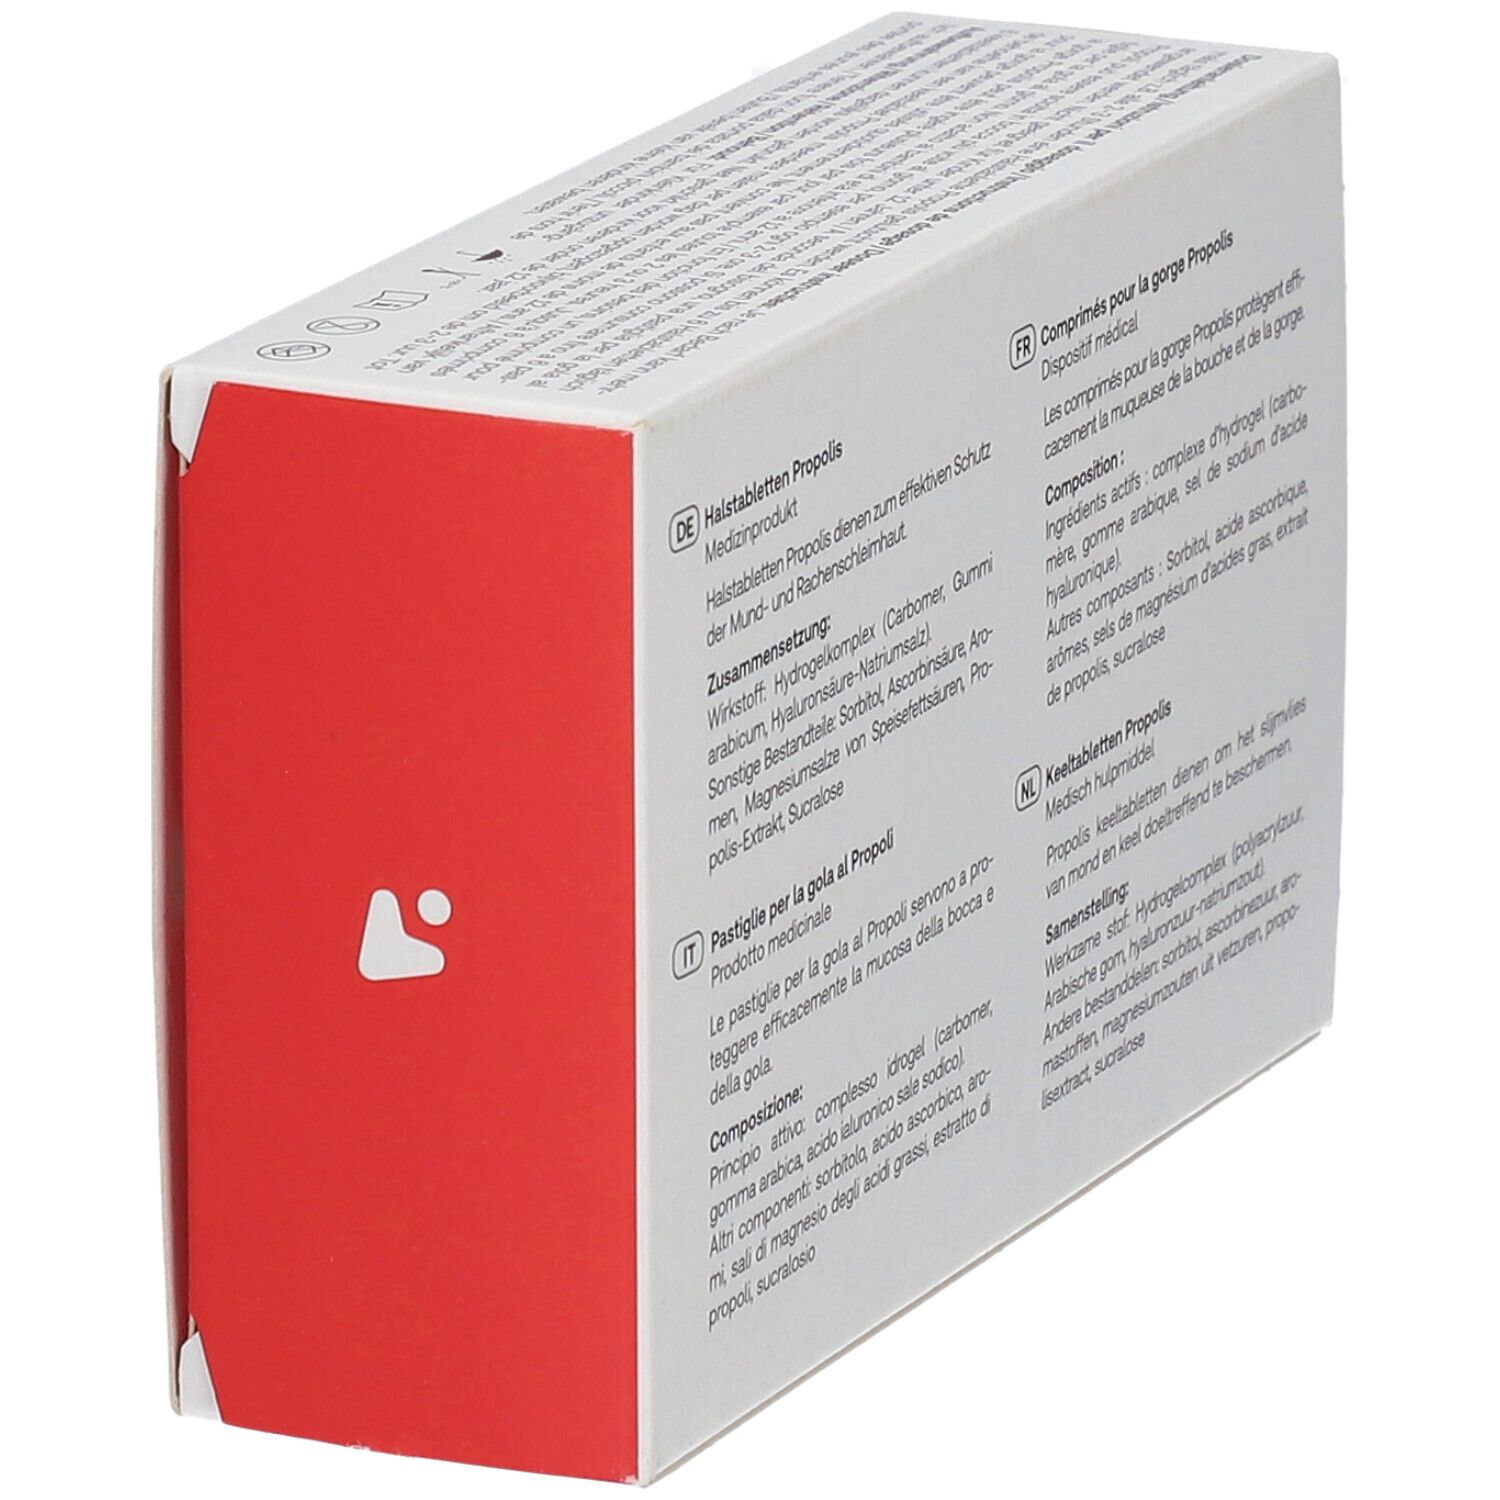 RedCare Pastilles Gorge – Propolis 5 mg par Pastille – Medicament